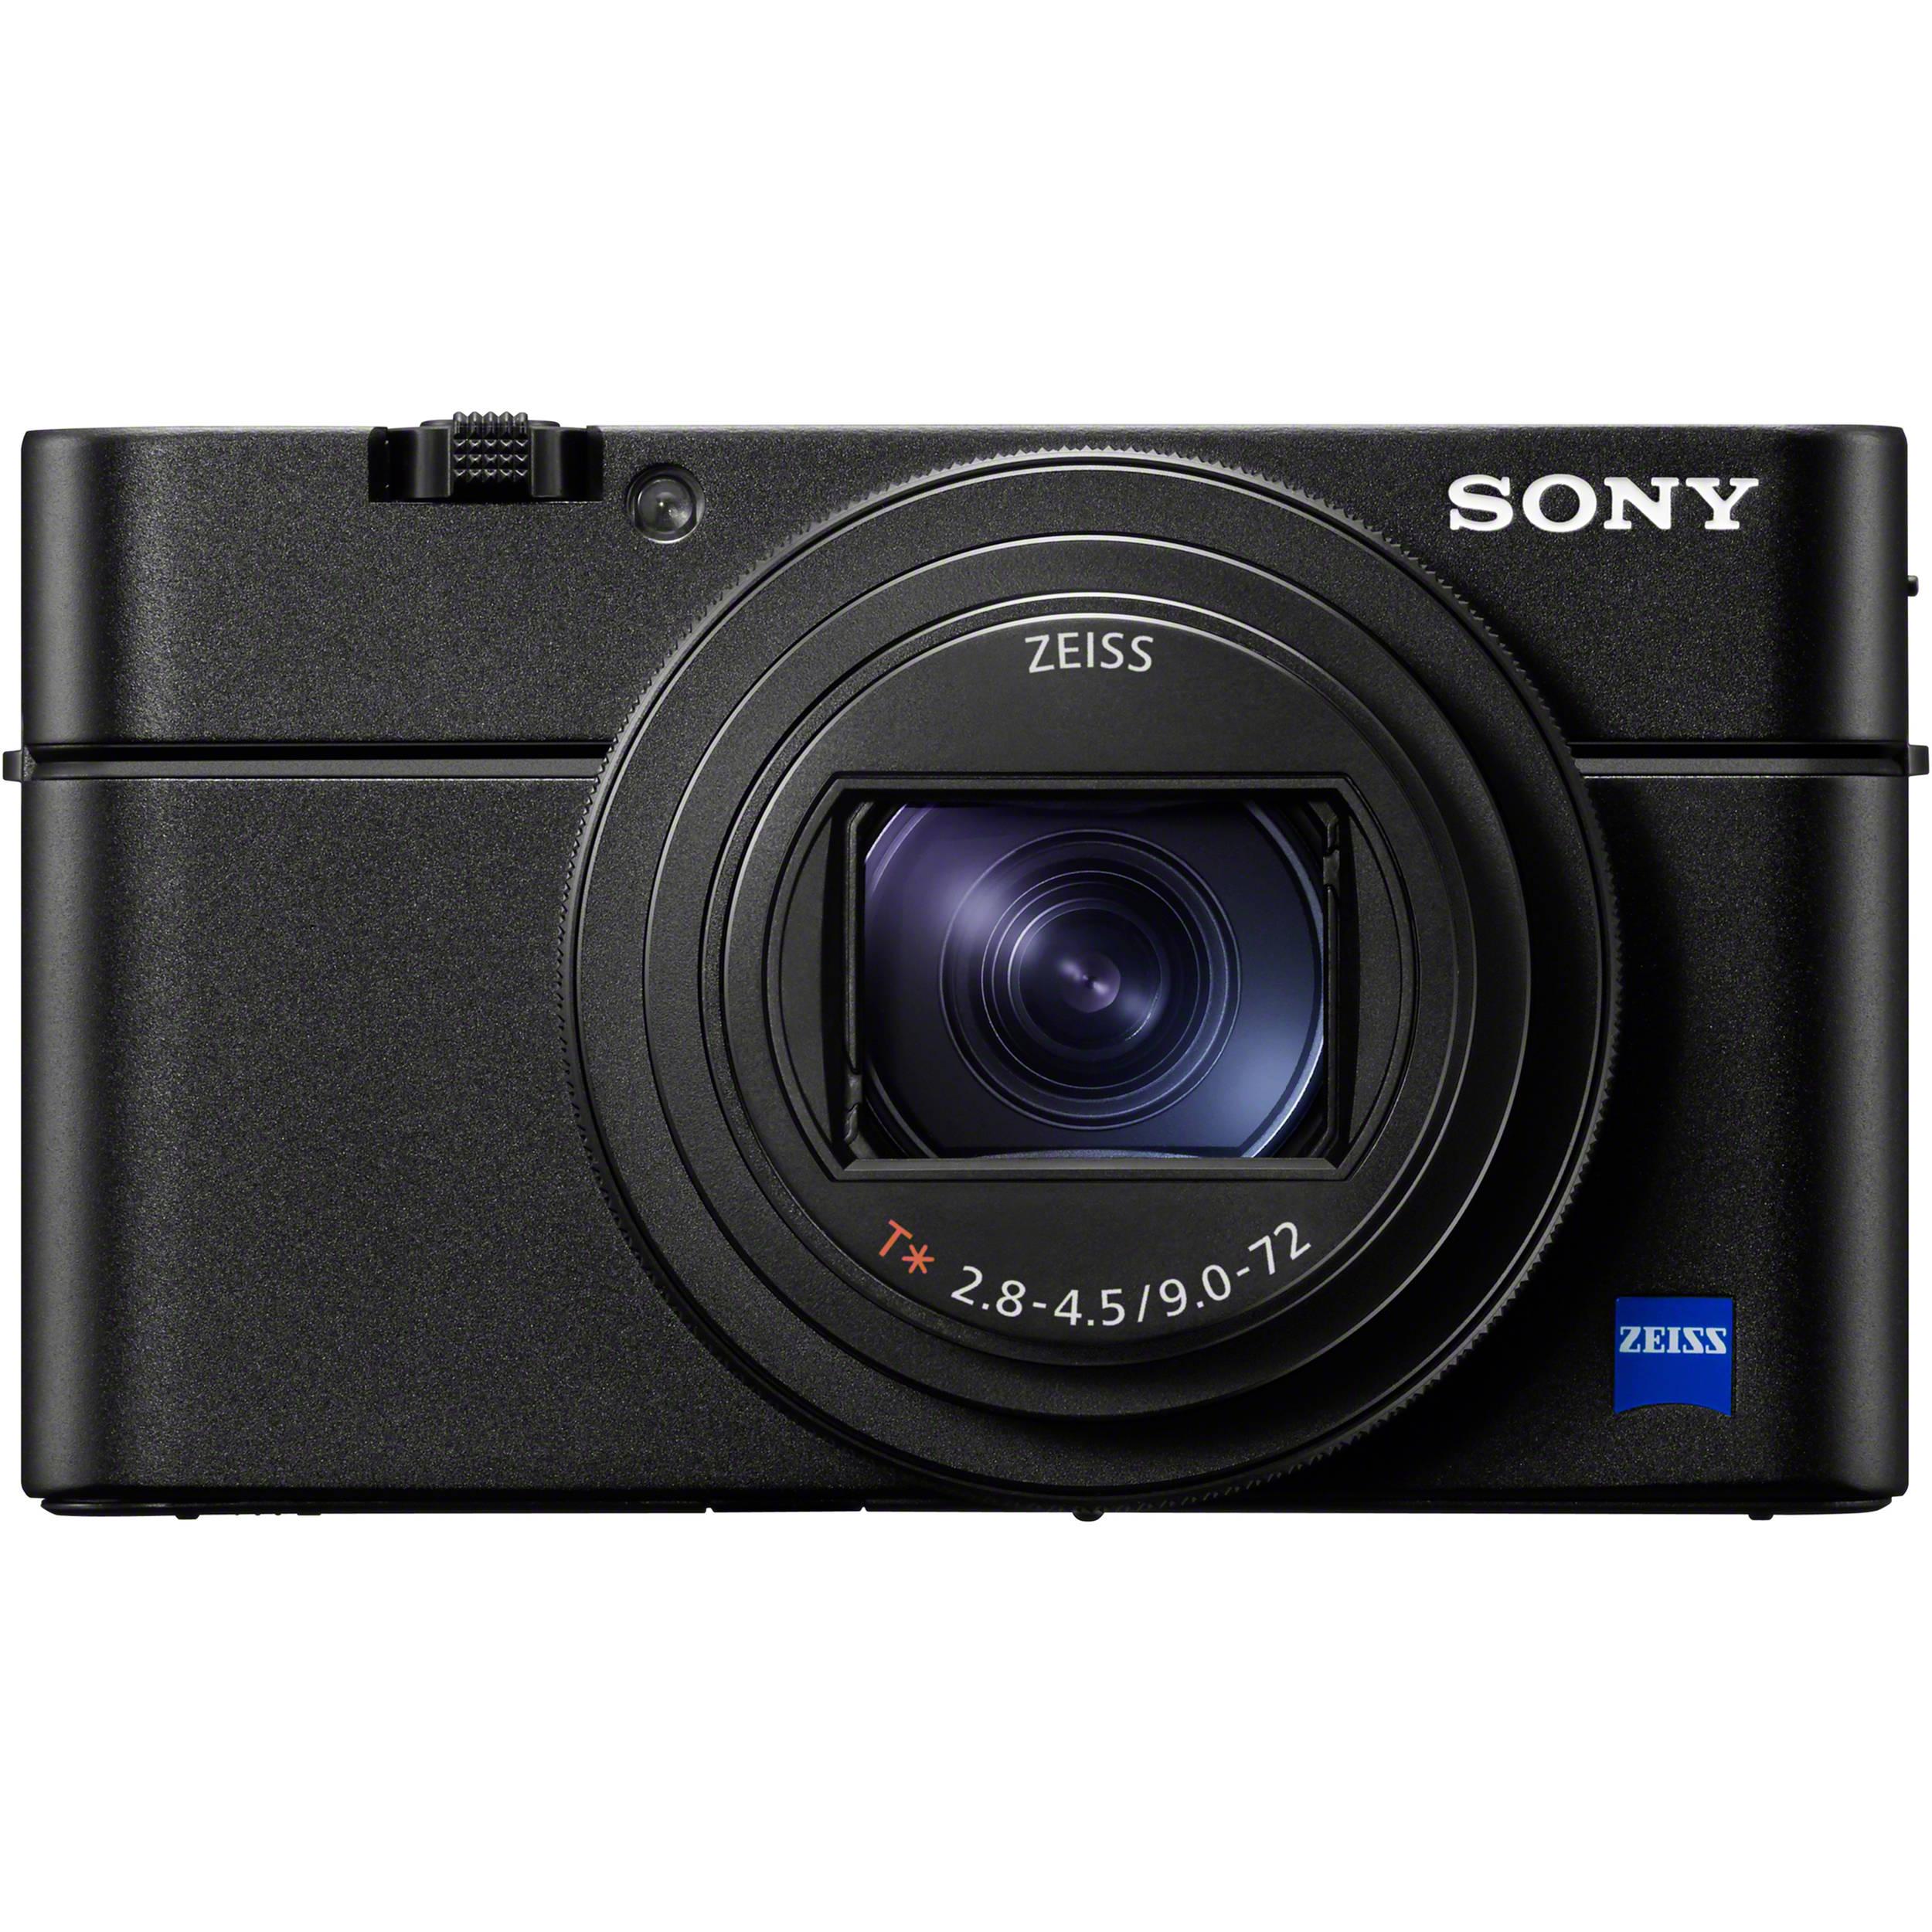 Sony Cyber-shot DSC-RX100 VII Digital Camera for $919 Shipped